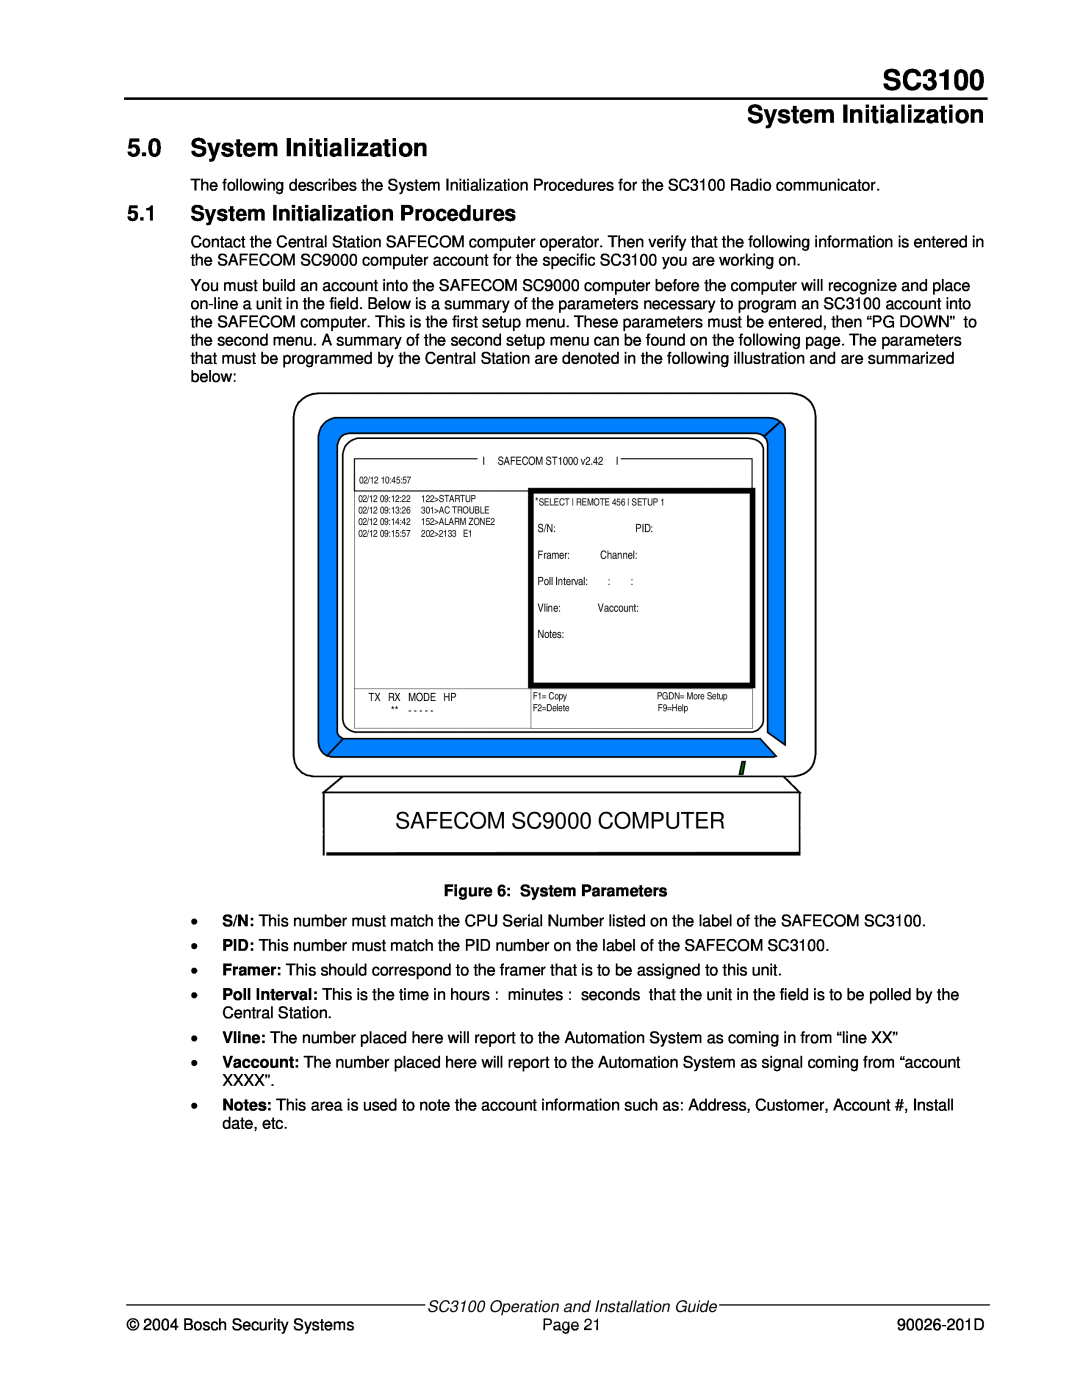 Bosch Appliances SC3100 manual System Initialization 5.0System Initialization, 5.1System Initialization Procedures 